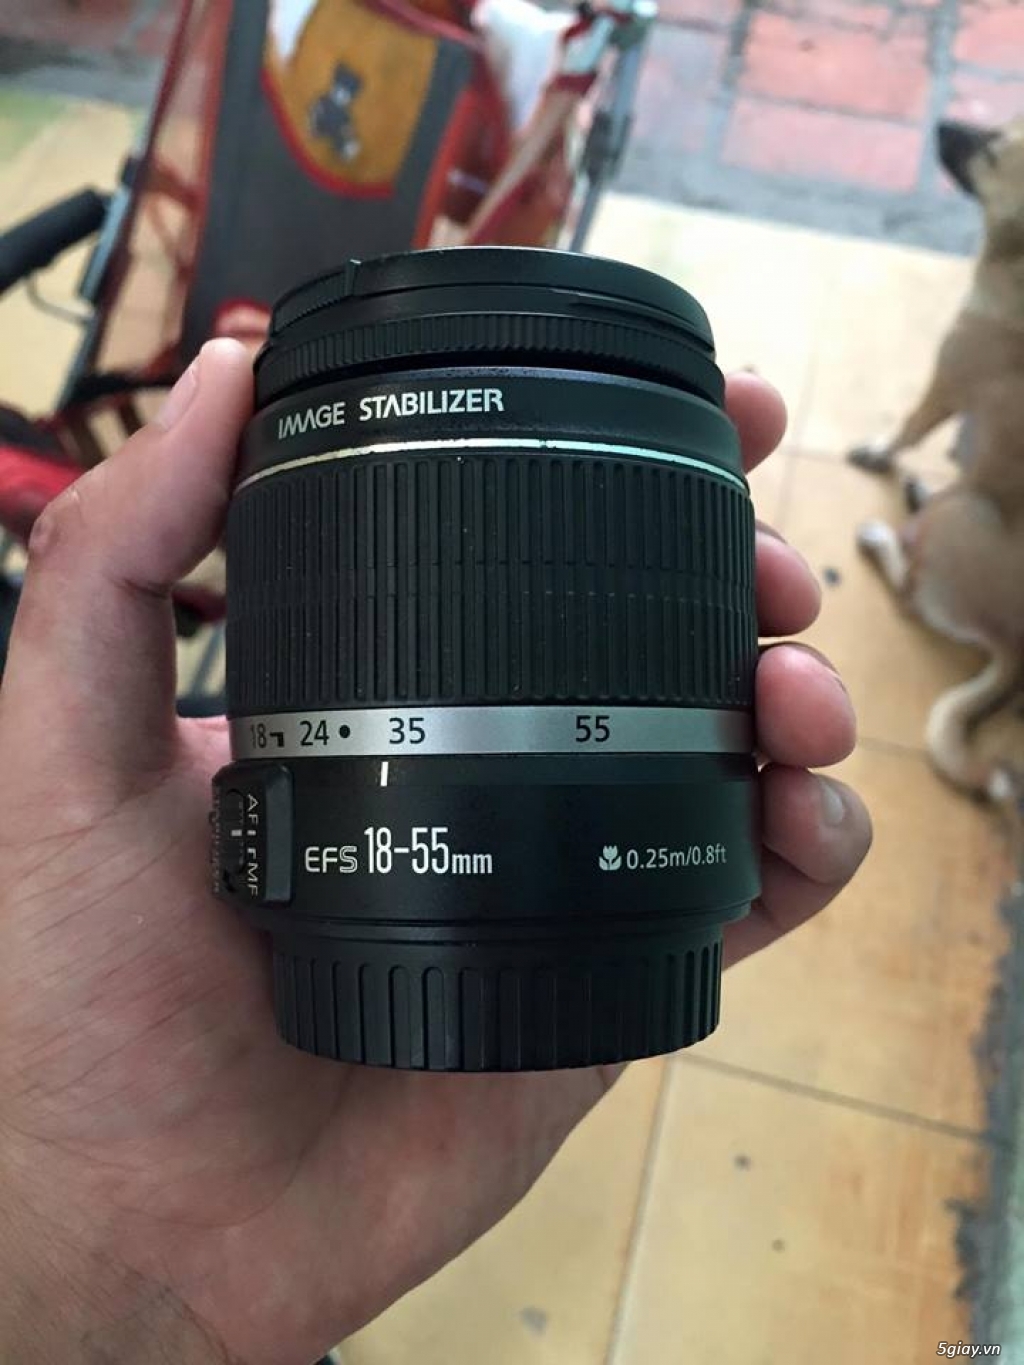 cần bán cái lens canon EFS 18-55mm 0.25m/0.8ft giá rẻ đây - 4